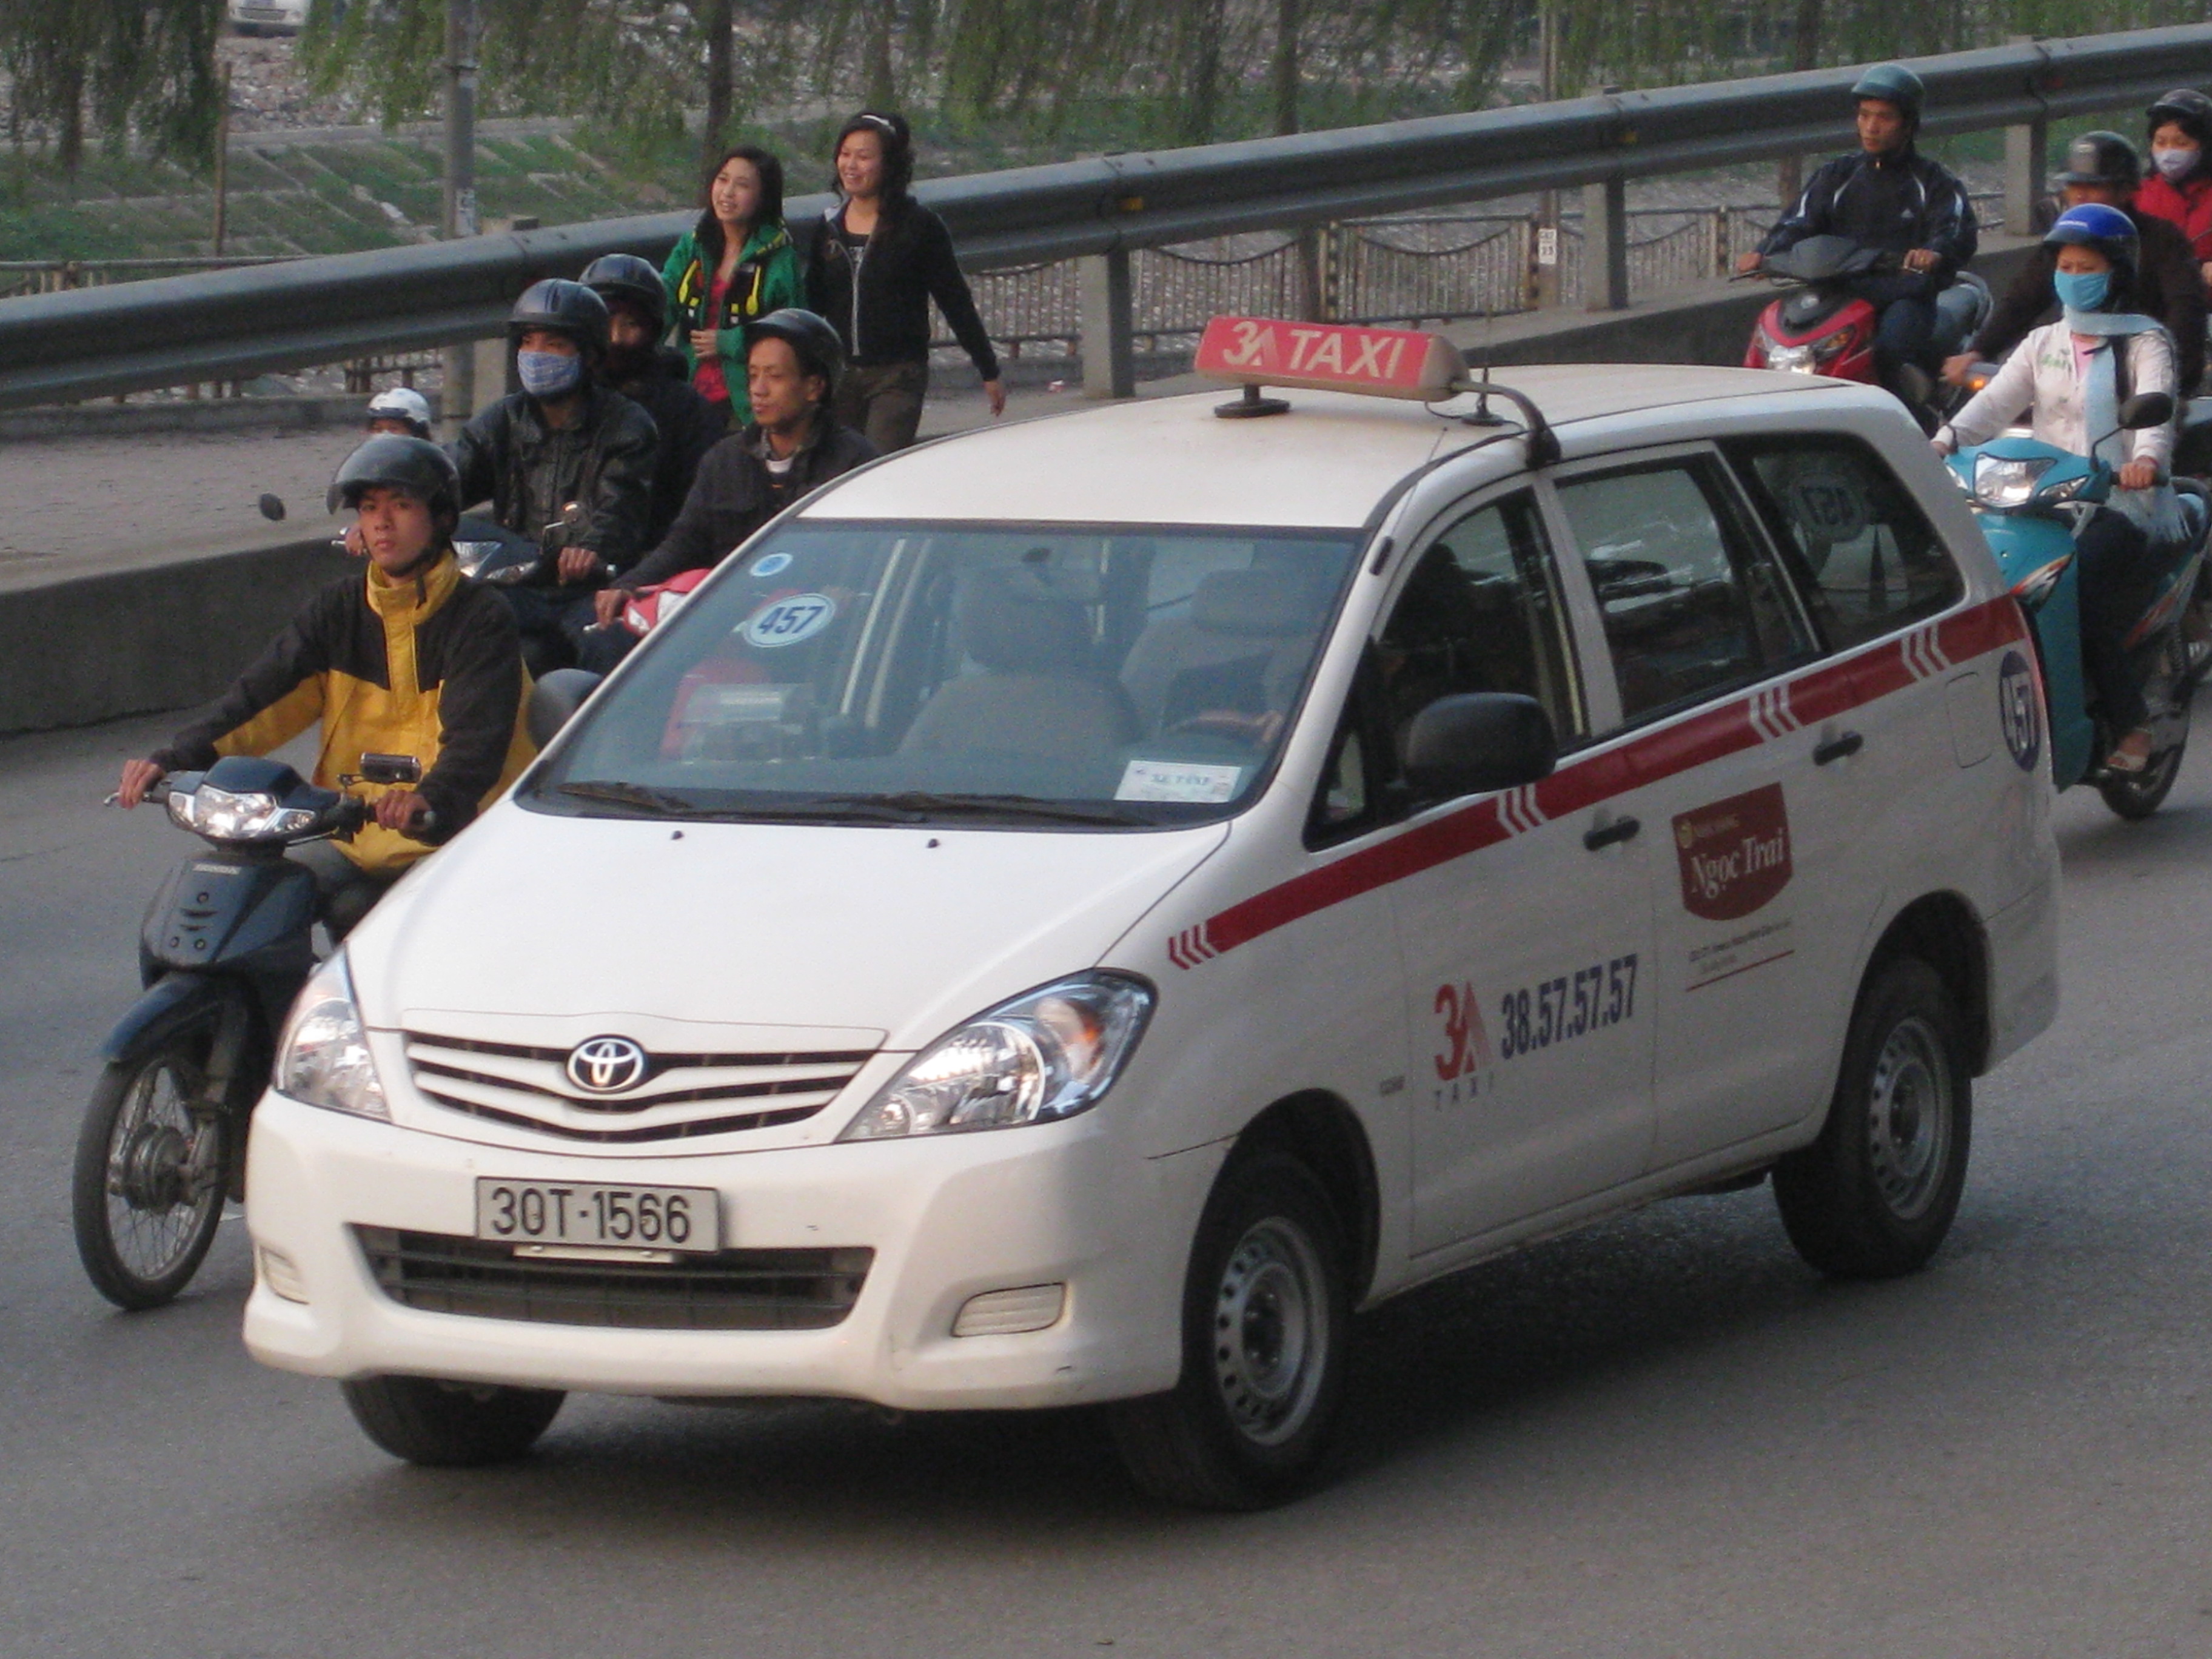 On street - Toyota Innova Taxi | Flickr - Photo Sharing!